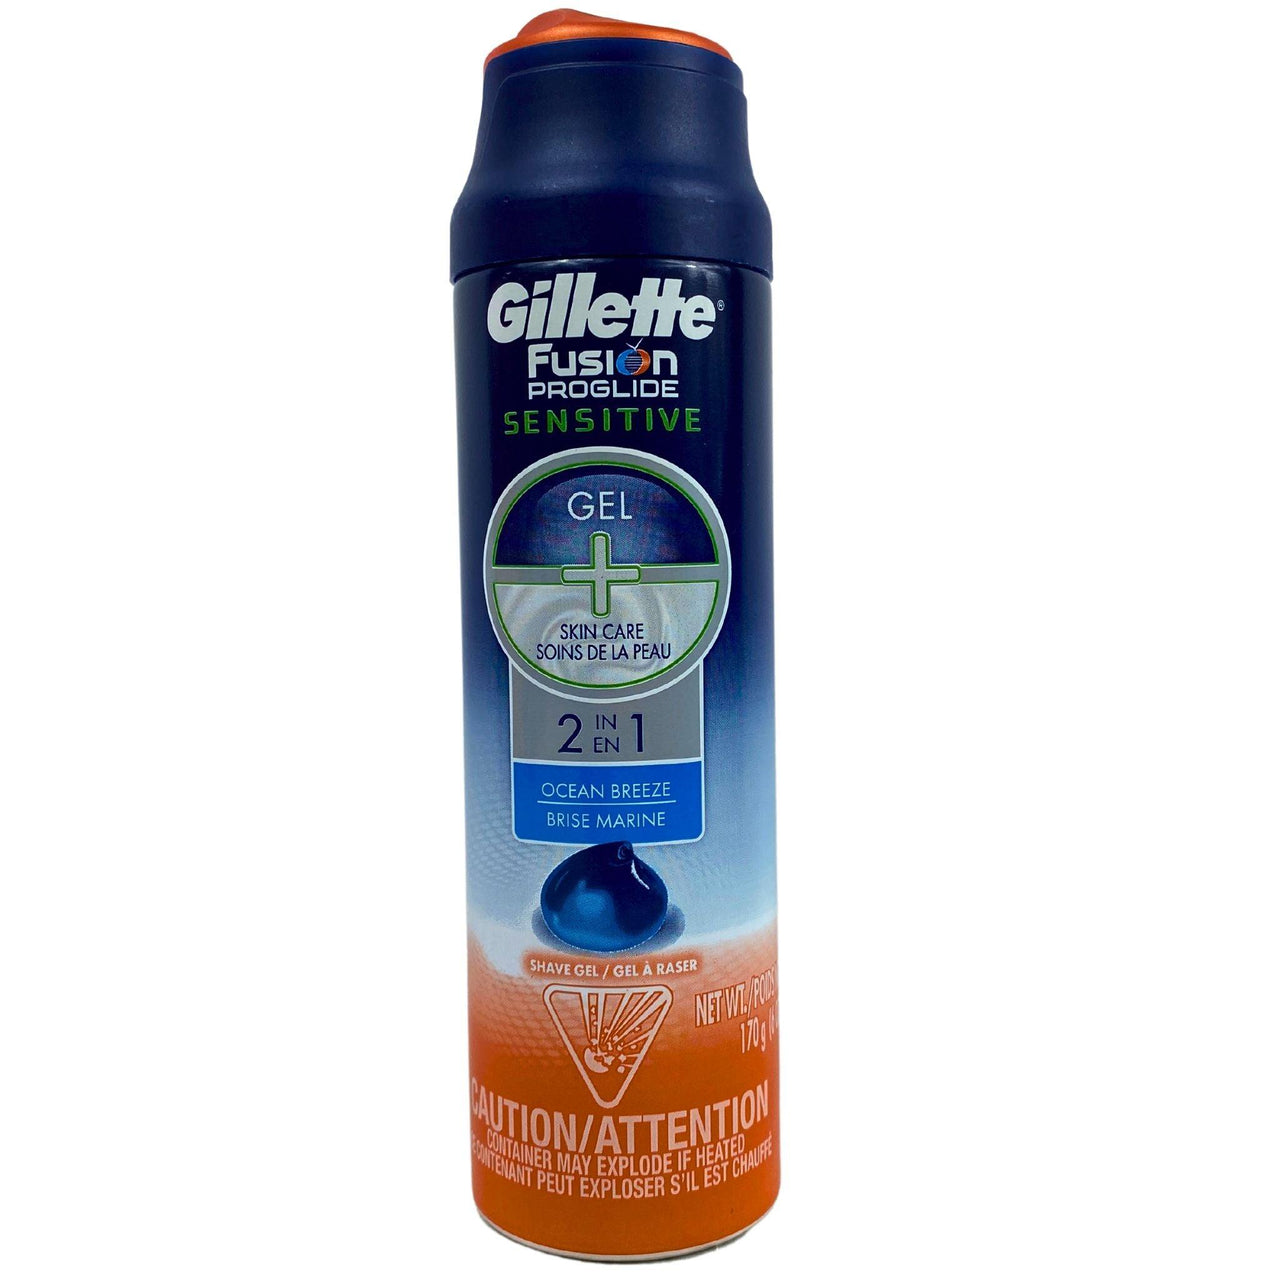 Gillette Fusion Proglide Sensitive Gel 2 in 1 Ocean Breeze Shave Gel 6oz (50 Pcs Lot) - Discount Wholesalers Inc